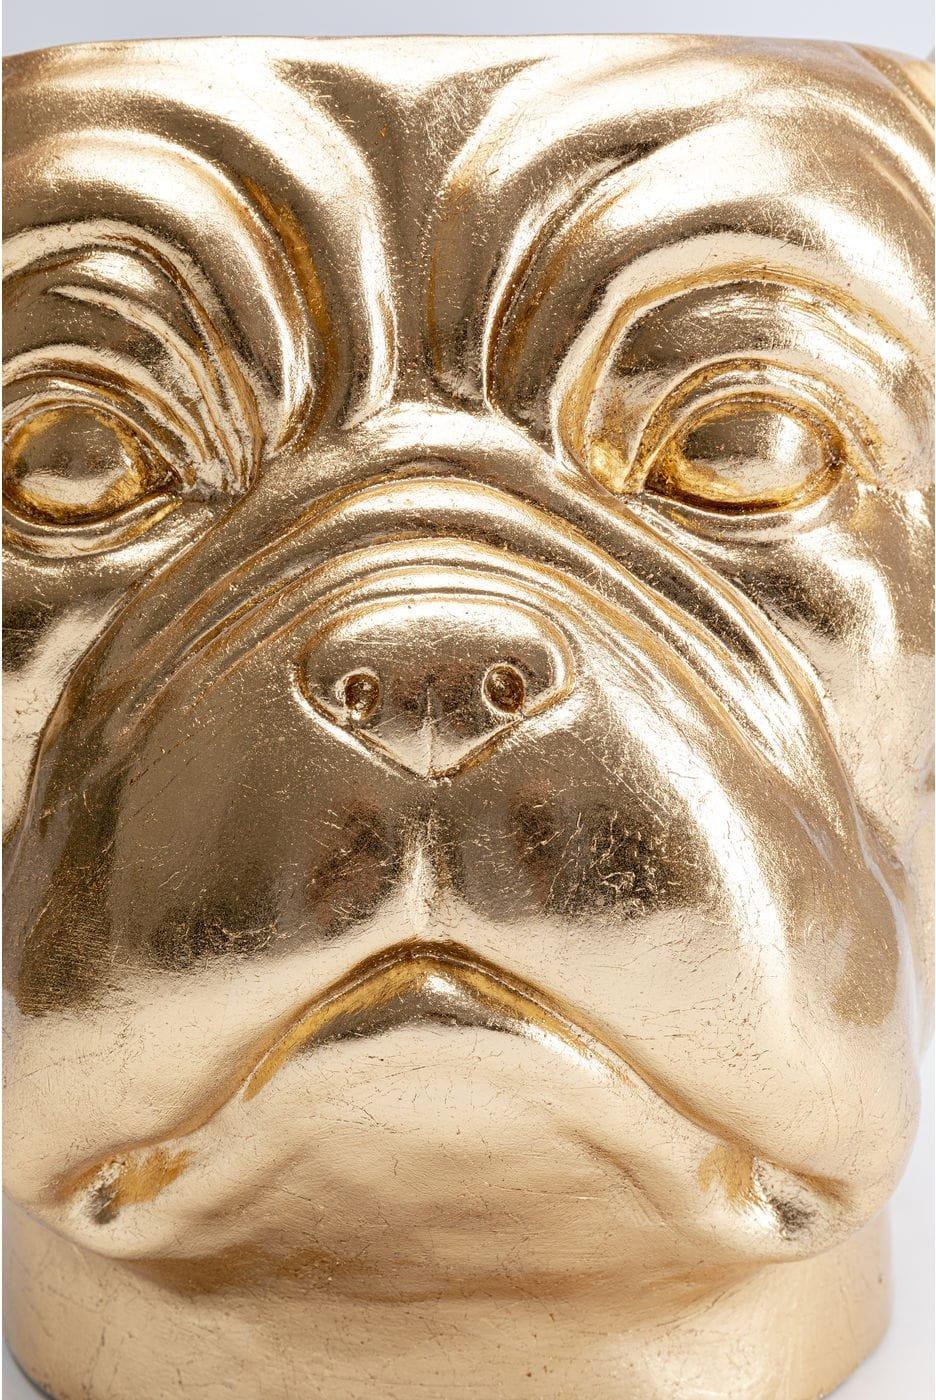 KARE Design Deko Übertopf Bulldog Gold  